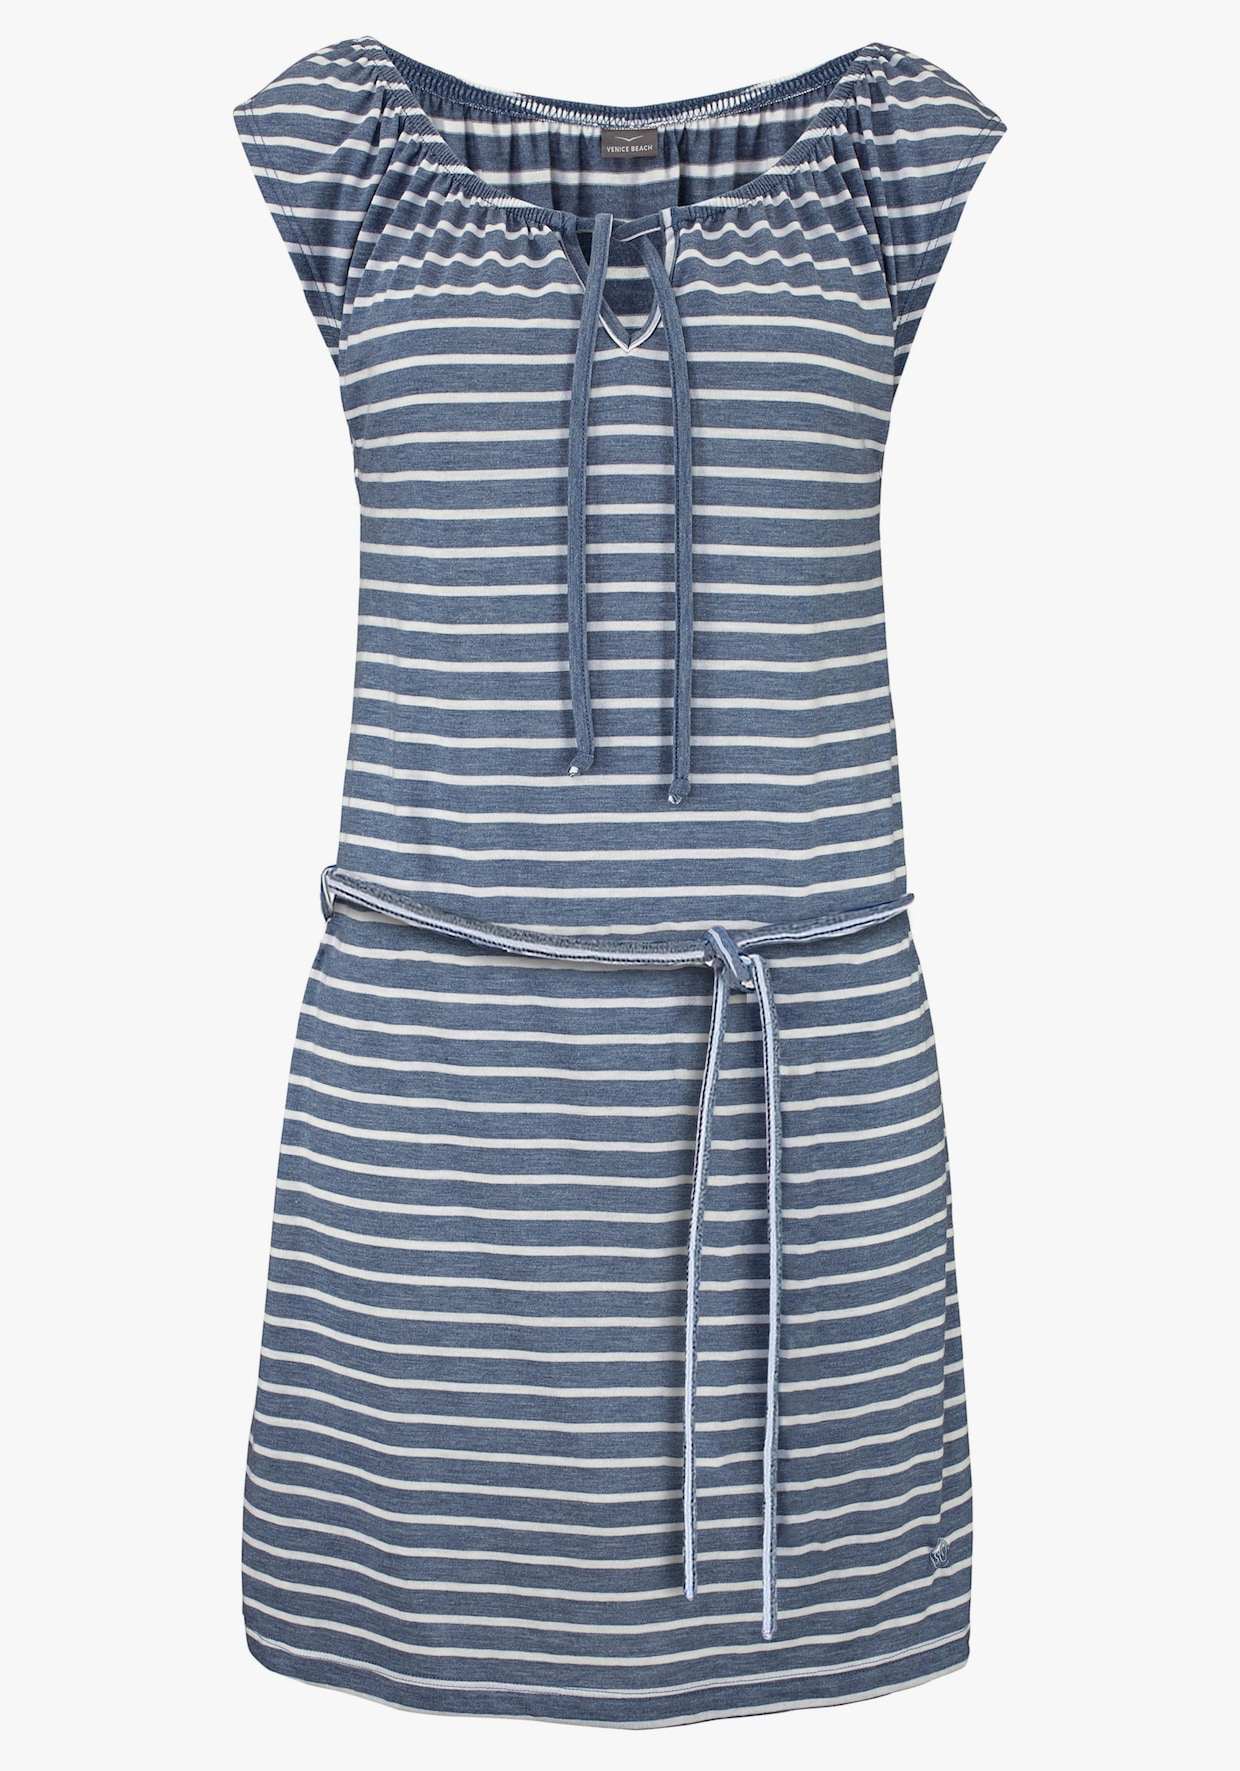 Venice Beach Jersey jurk - blauw/wit gestreept